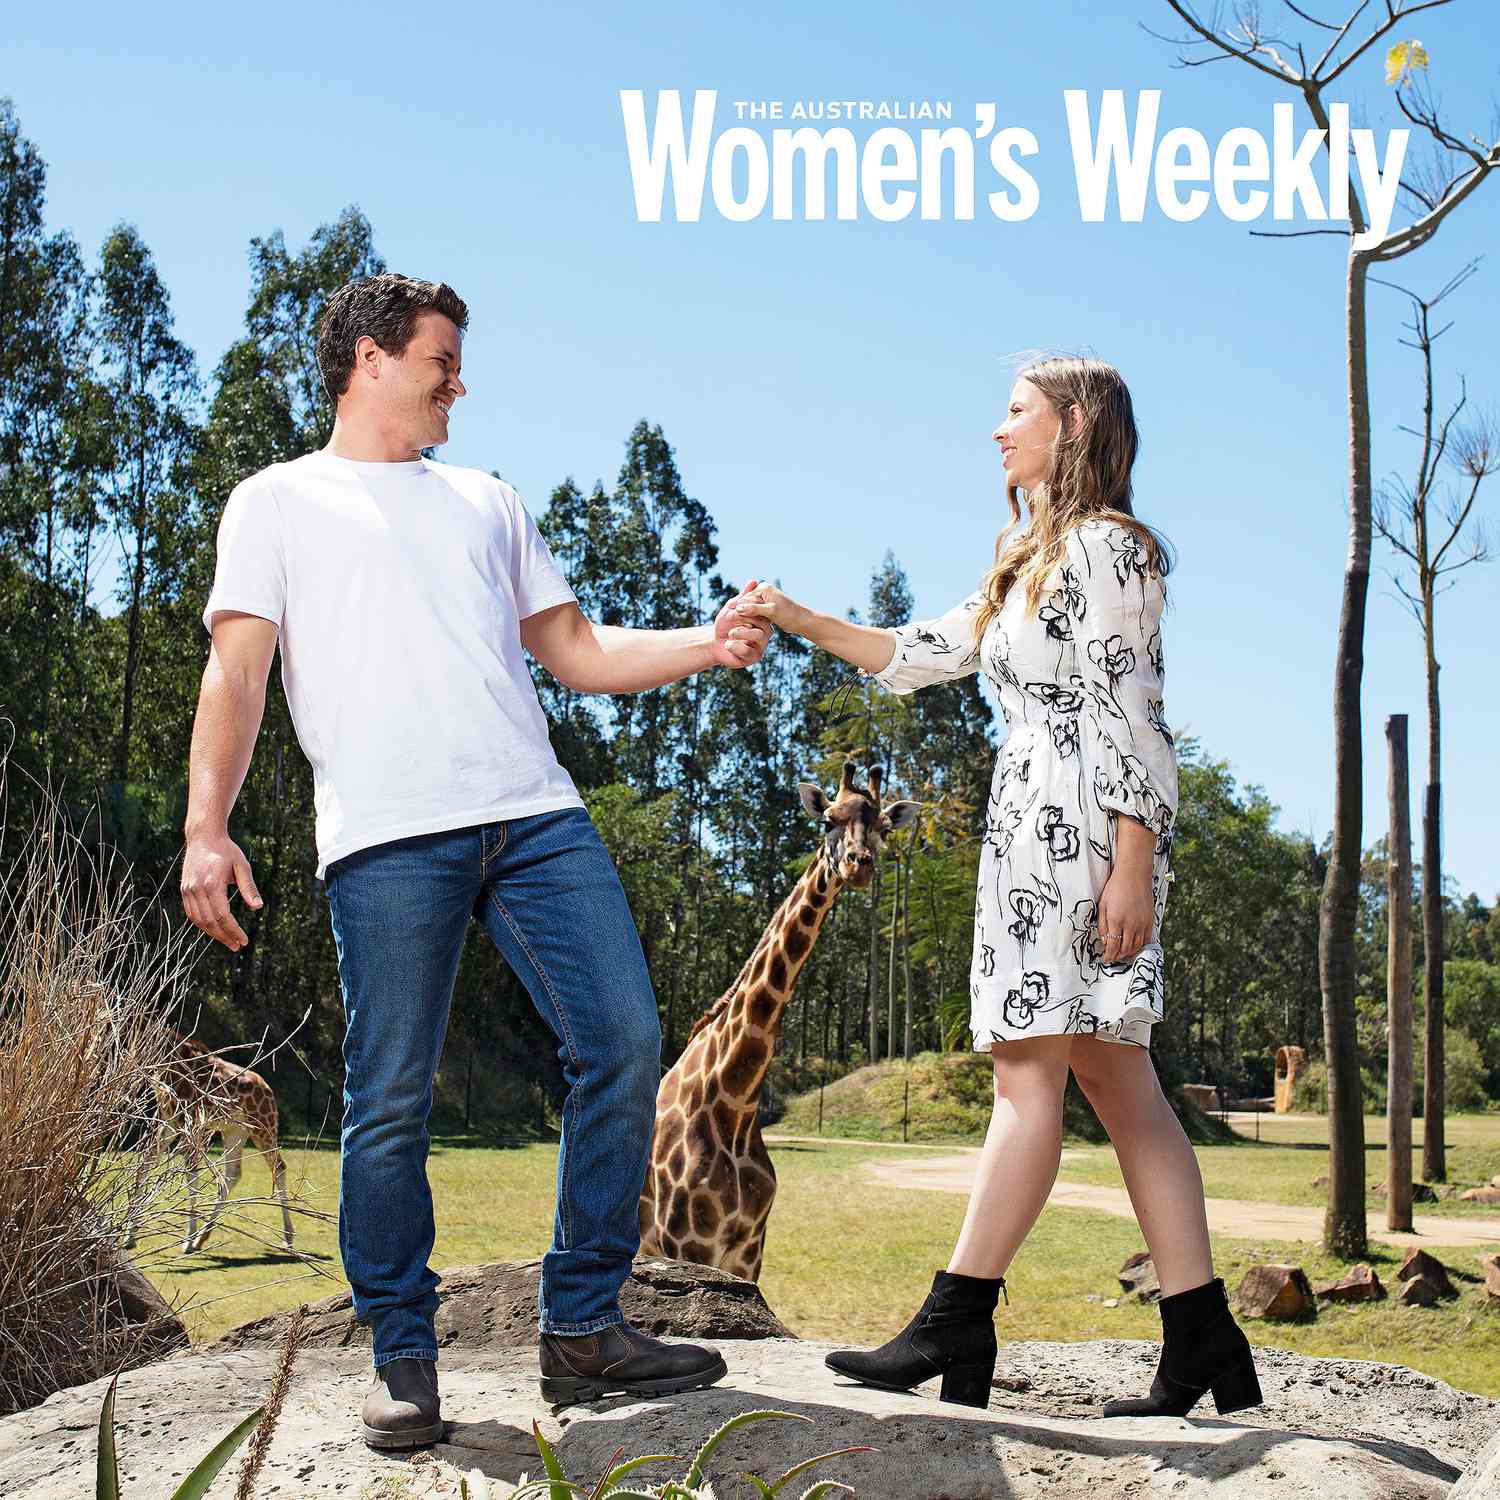 Bindi IrwinCredit: The Australian Women&rsquo;s Weekly